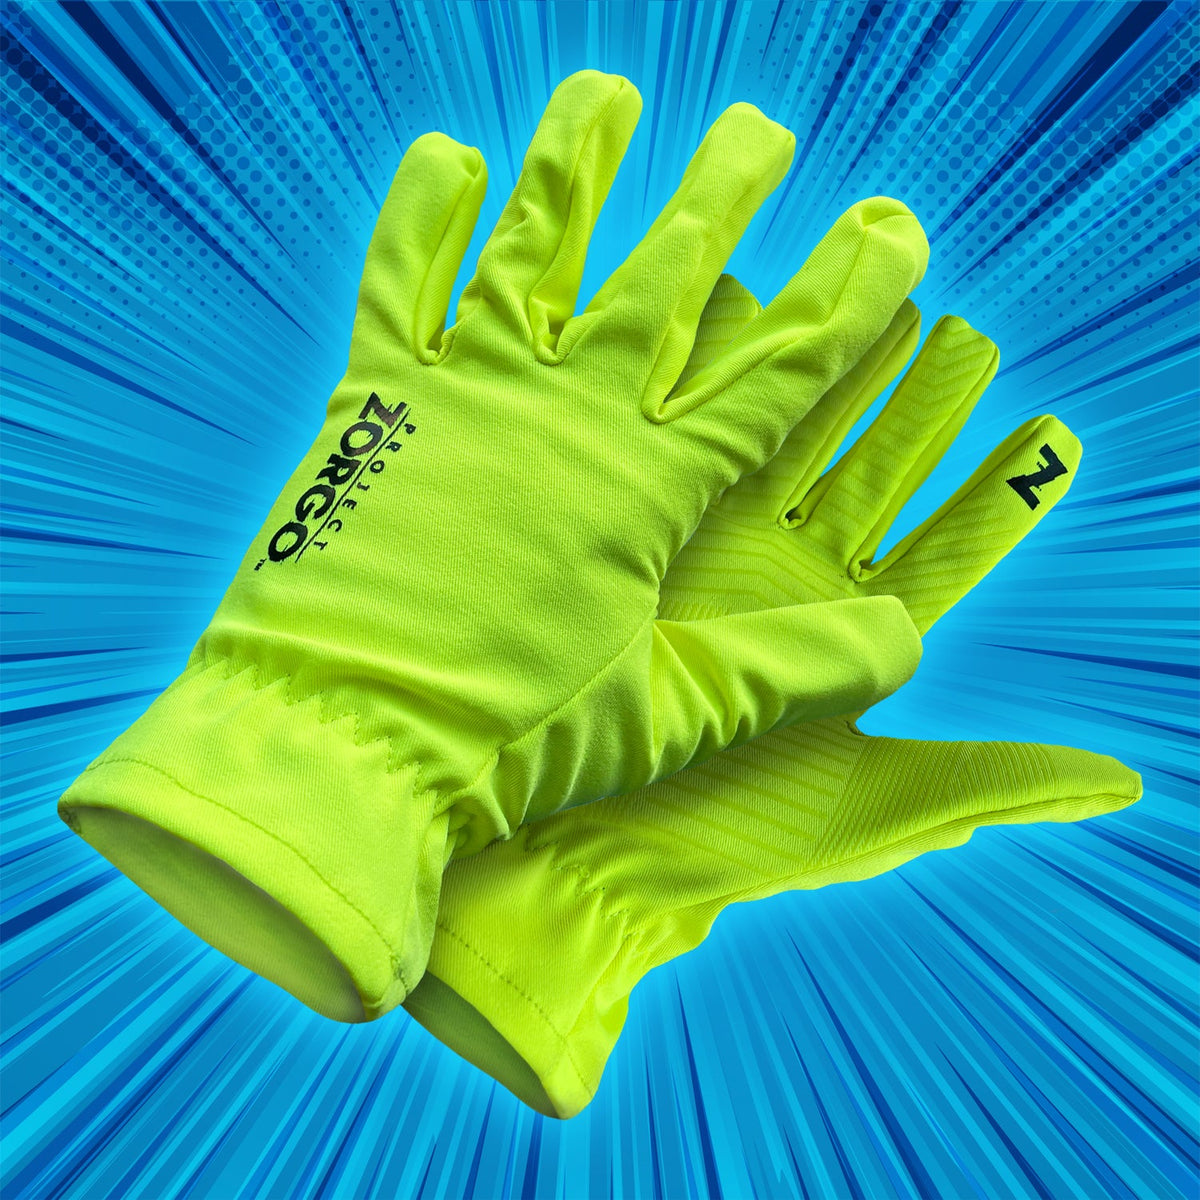 Project Zorgo‚Ñ¢ Tech Gloves - Adult